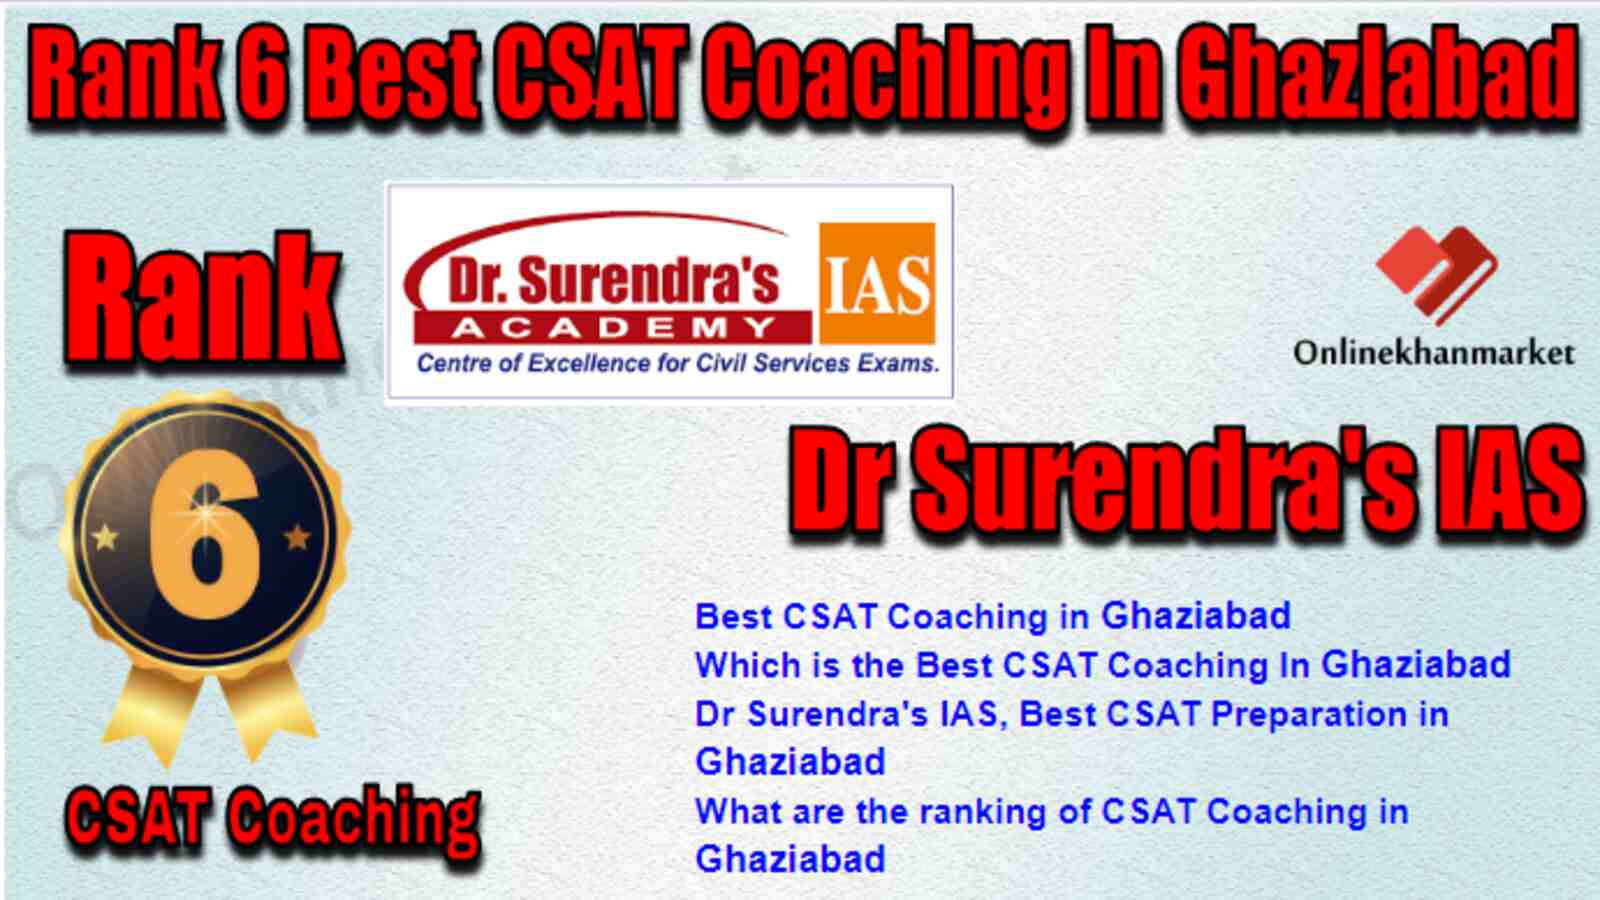 Rank 6 Best CSAT Coaching in Ghaziabad